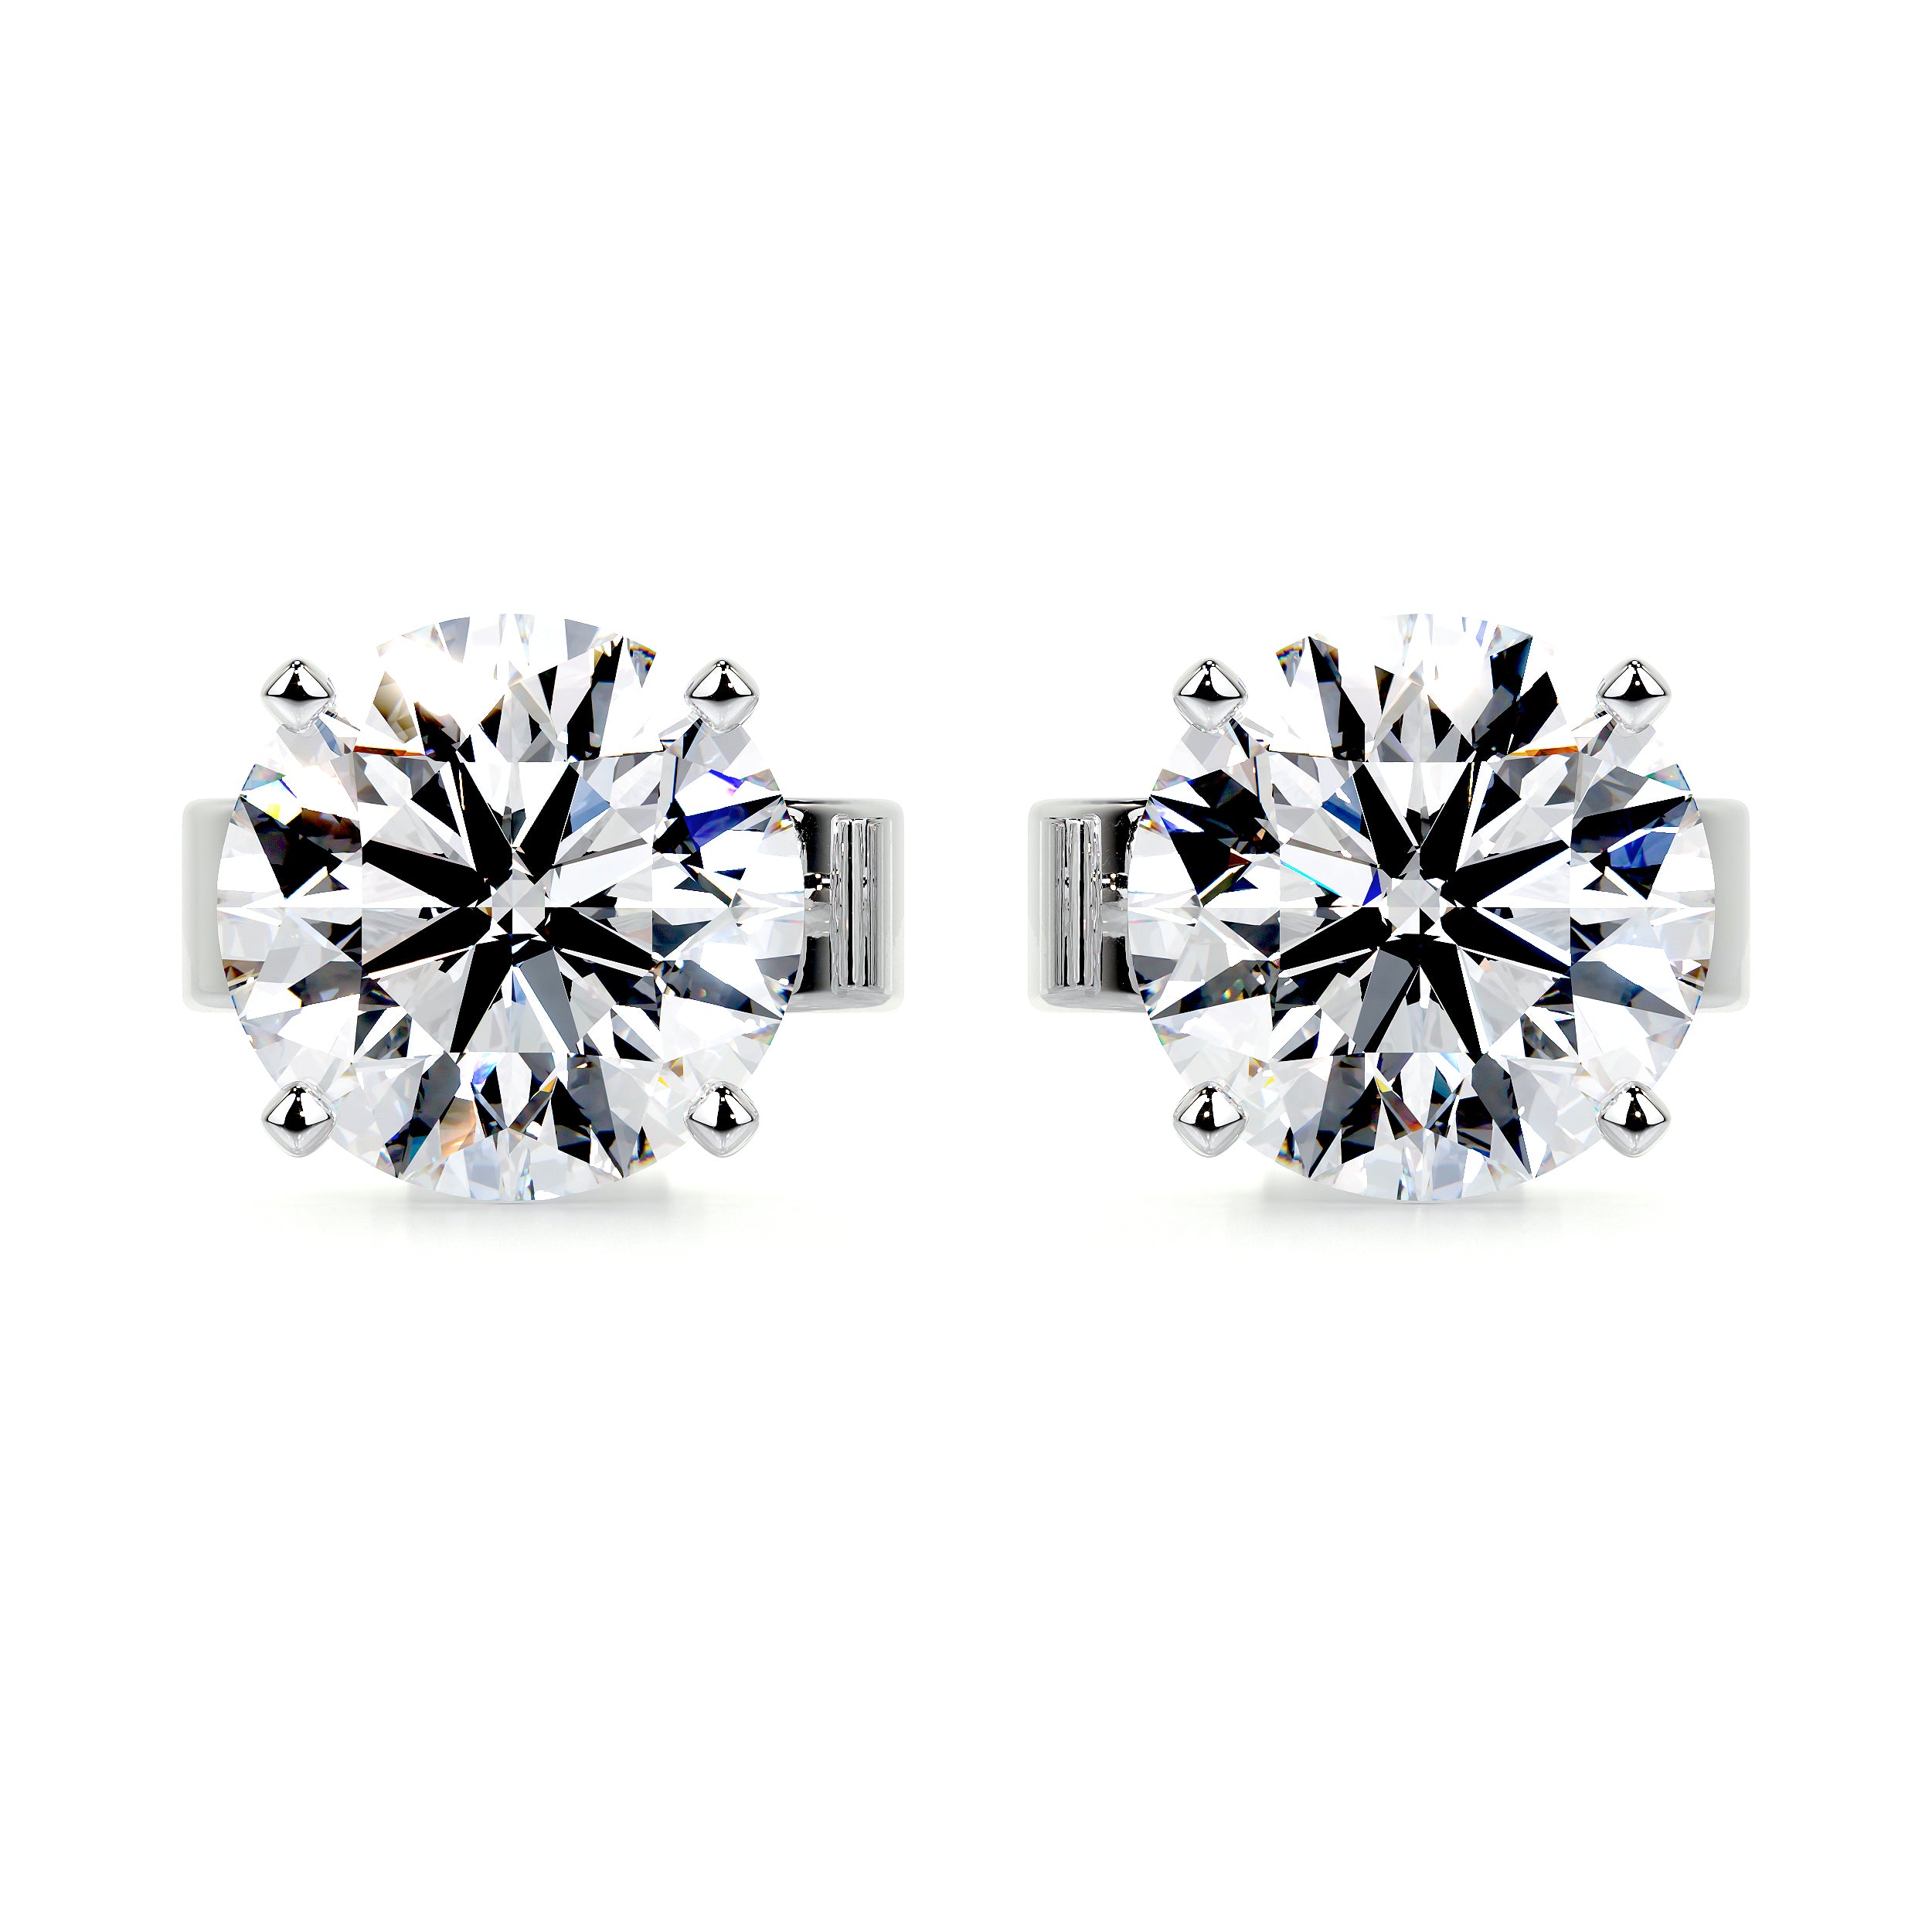 Allen Diamond Earrings   (6 Carat) -14K White Gold